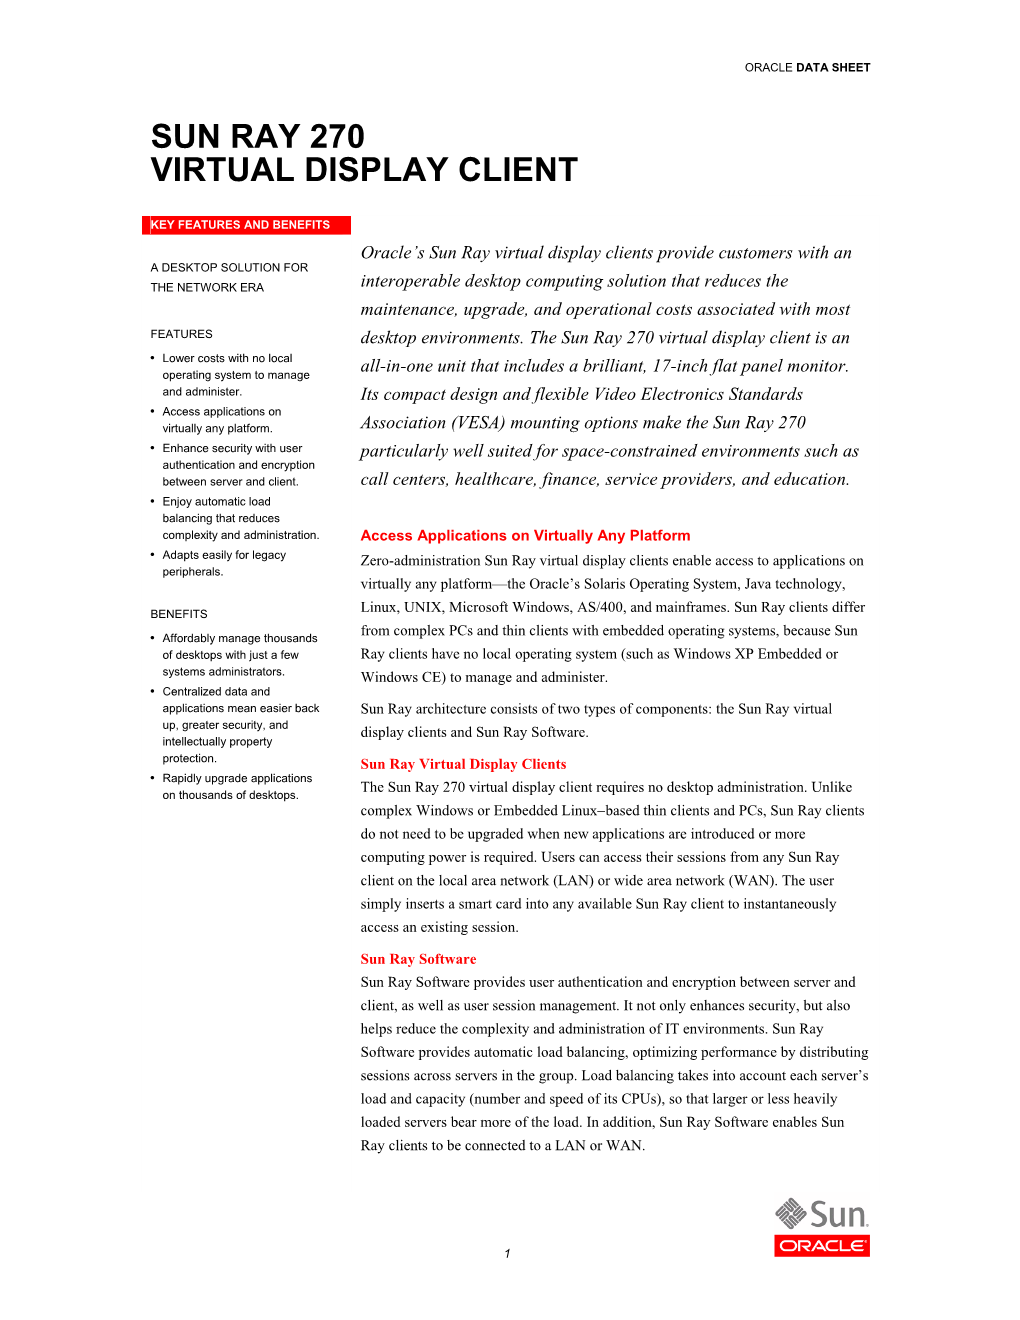 Sun Ray 270 Virtual Display Client